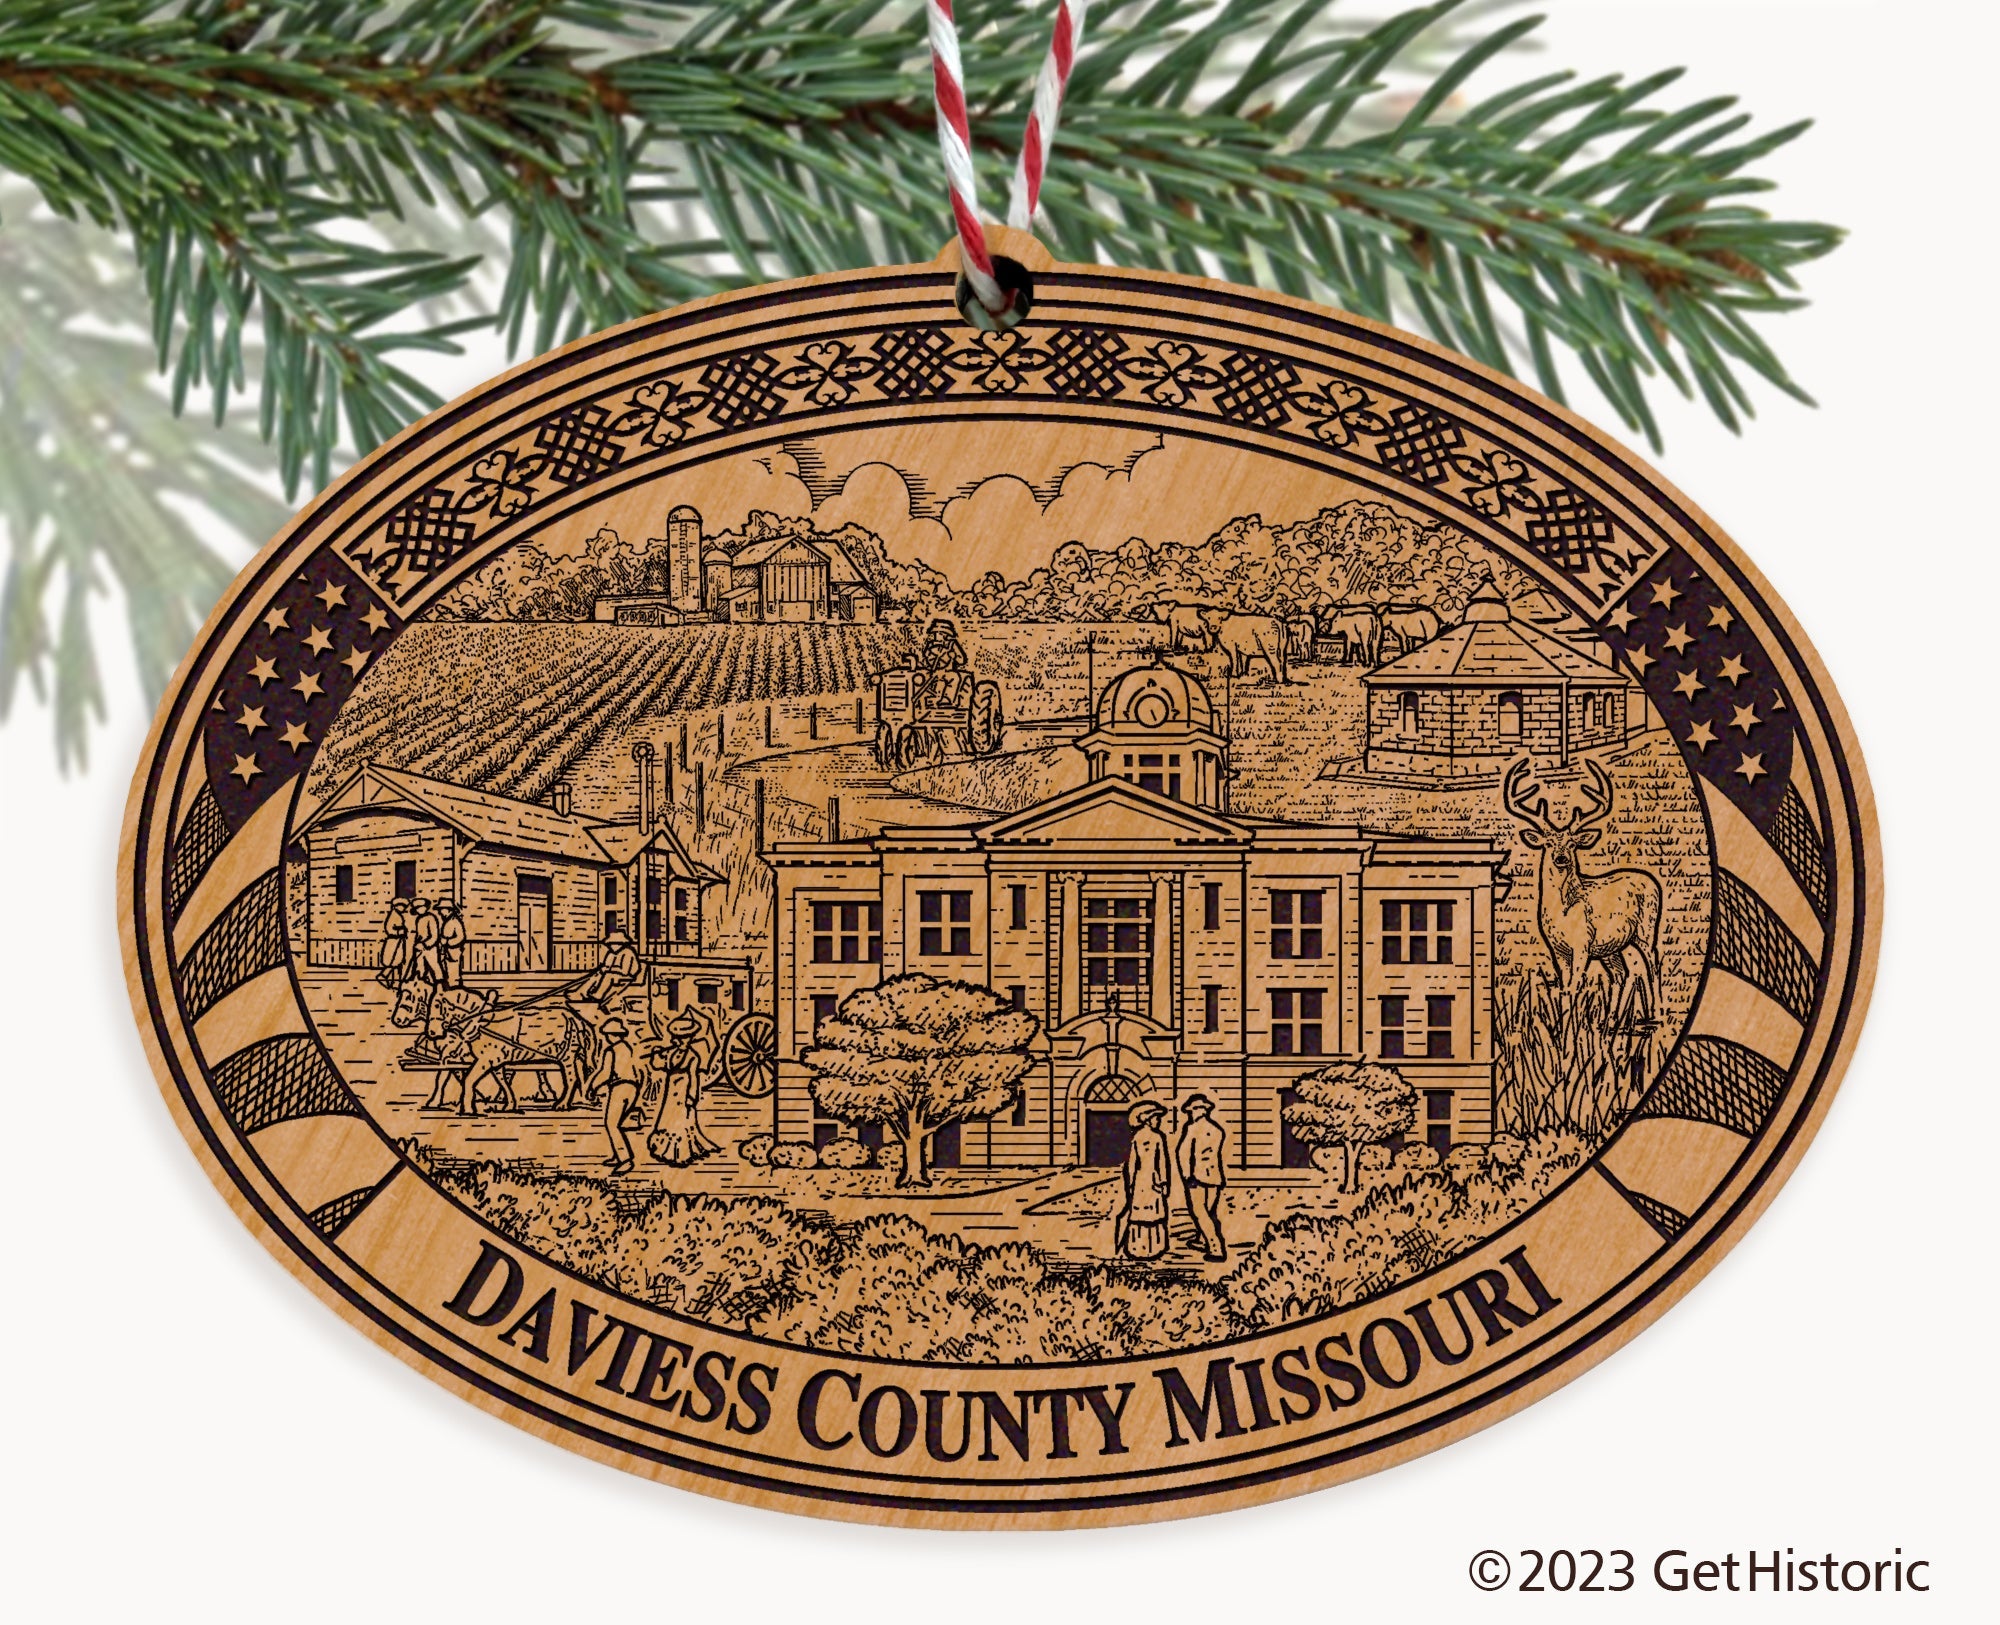 Daviess County Missouri Engraved Natural Ornament